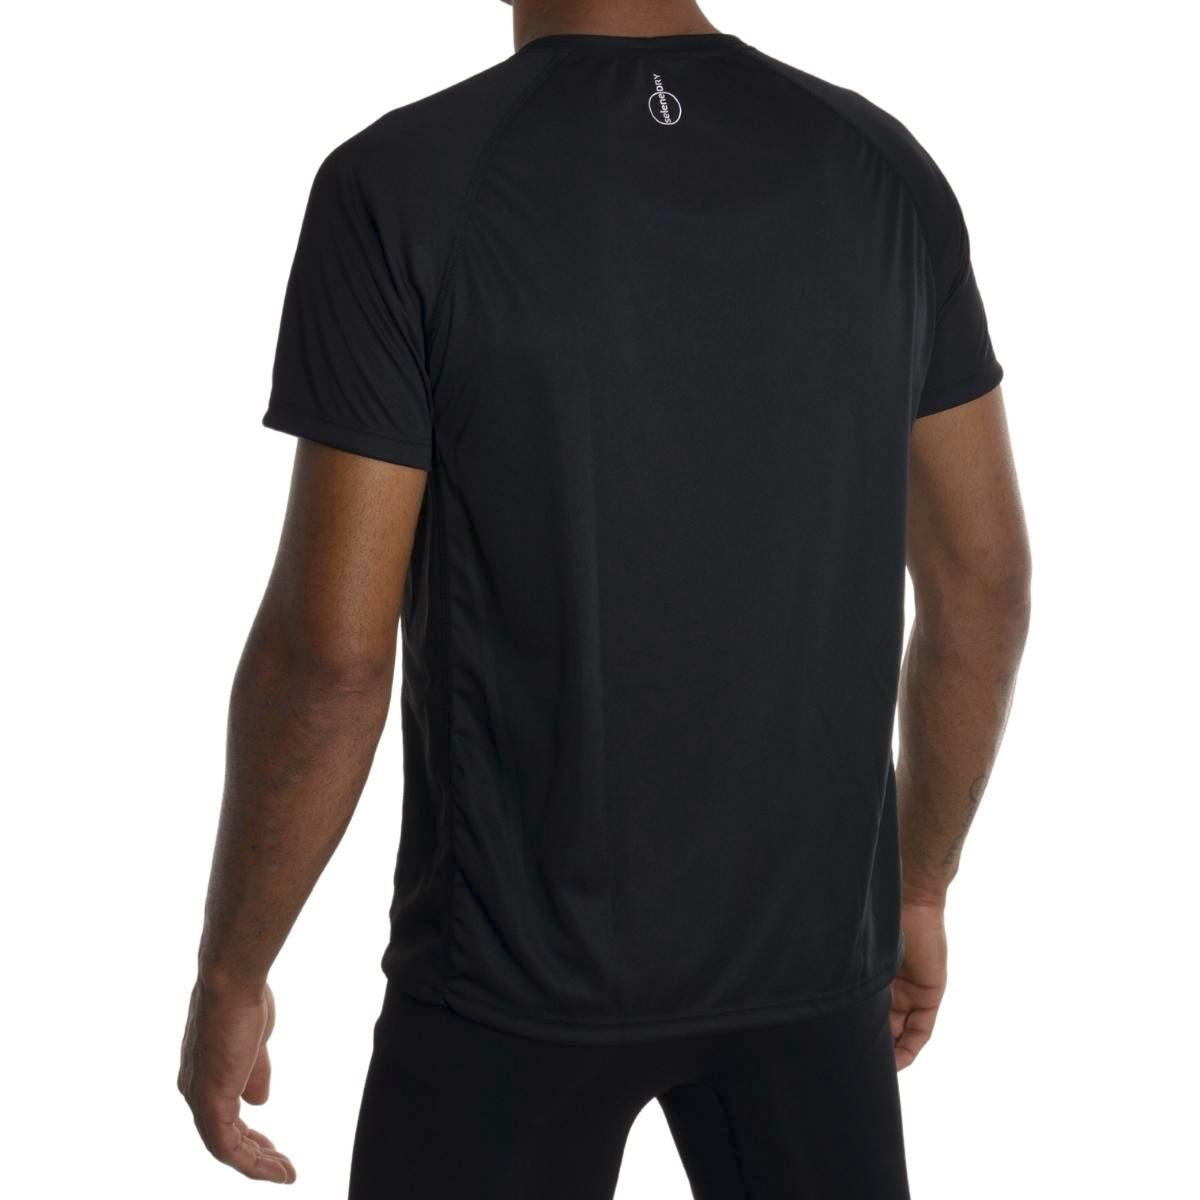 Camiseta dry fit preta masculina Selene